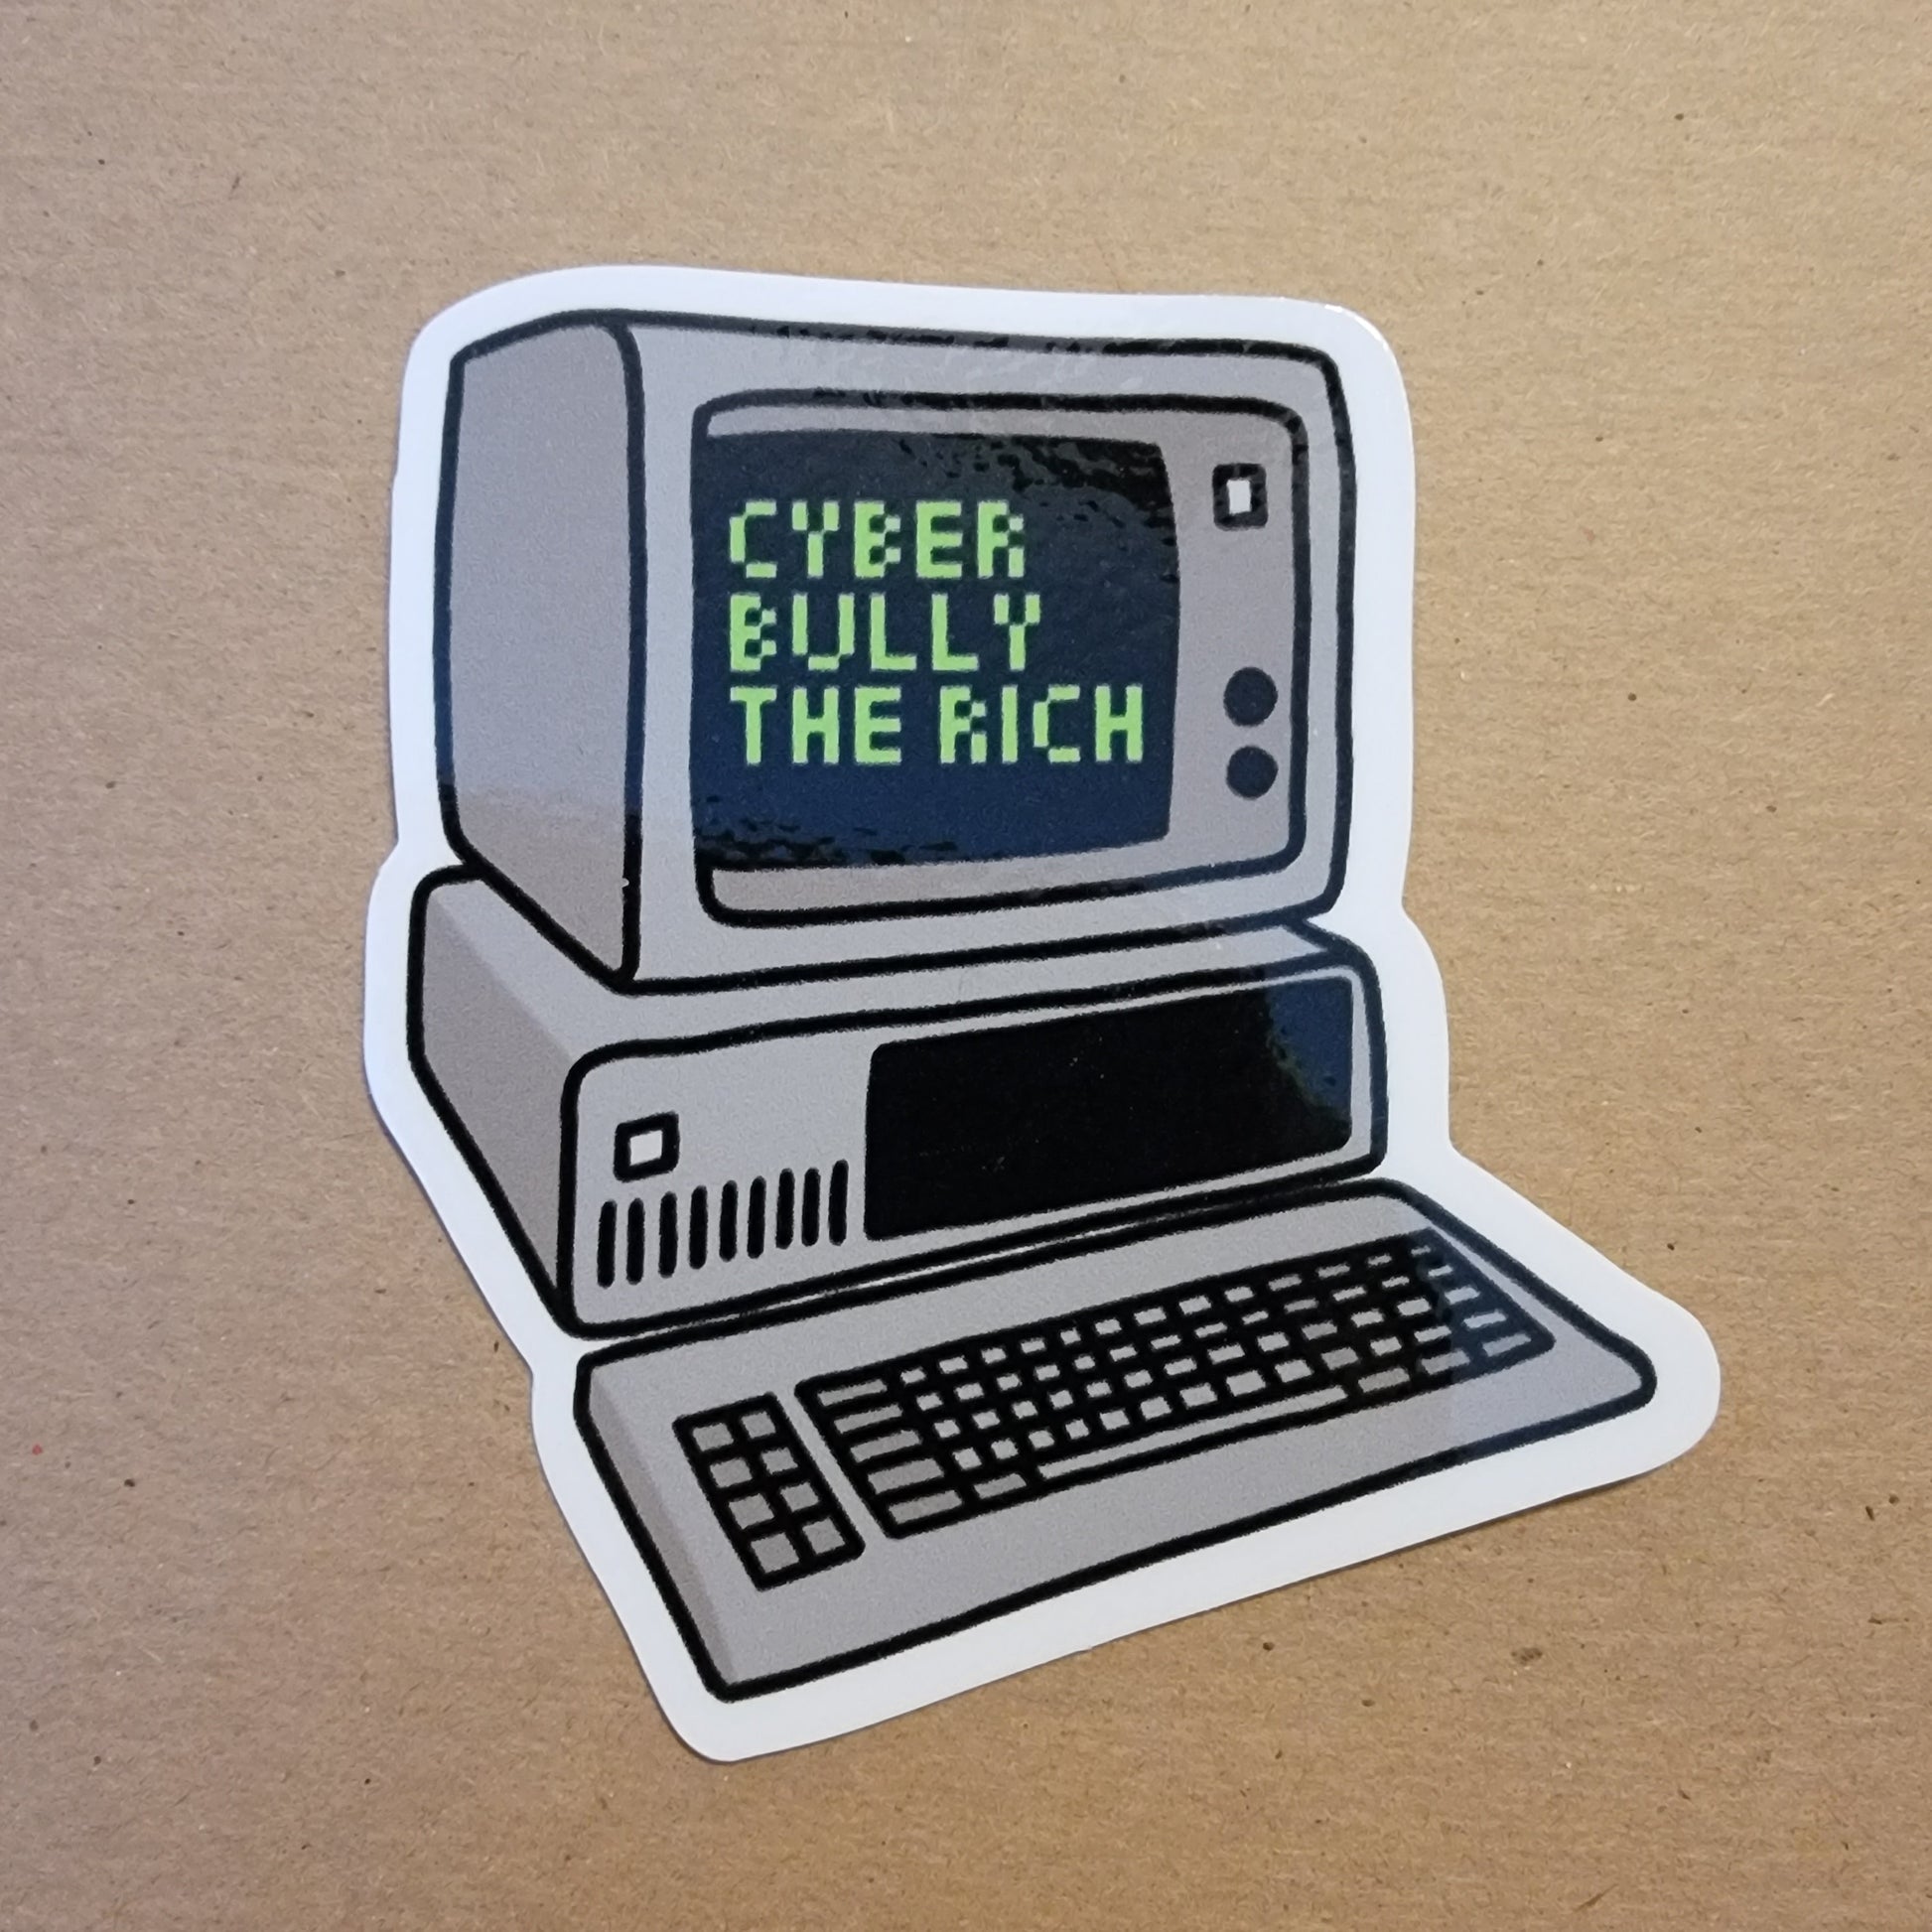 Cyberbully the Rich Sticker